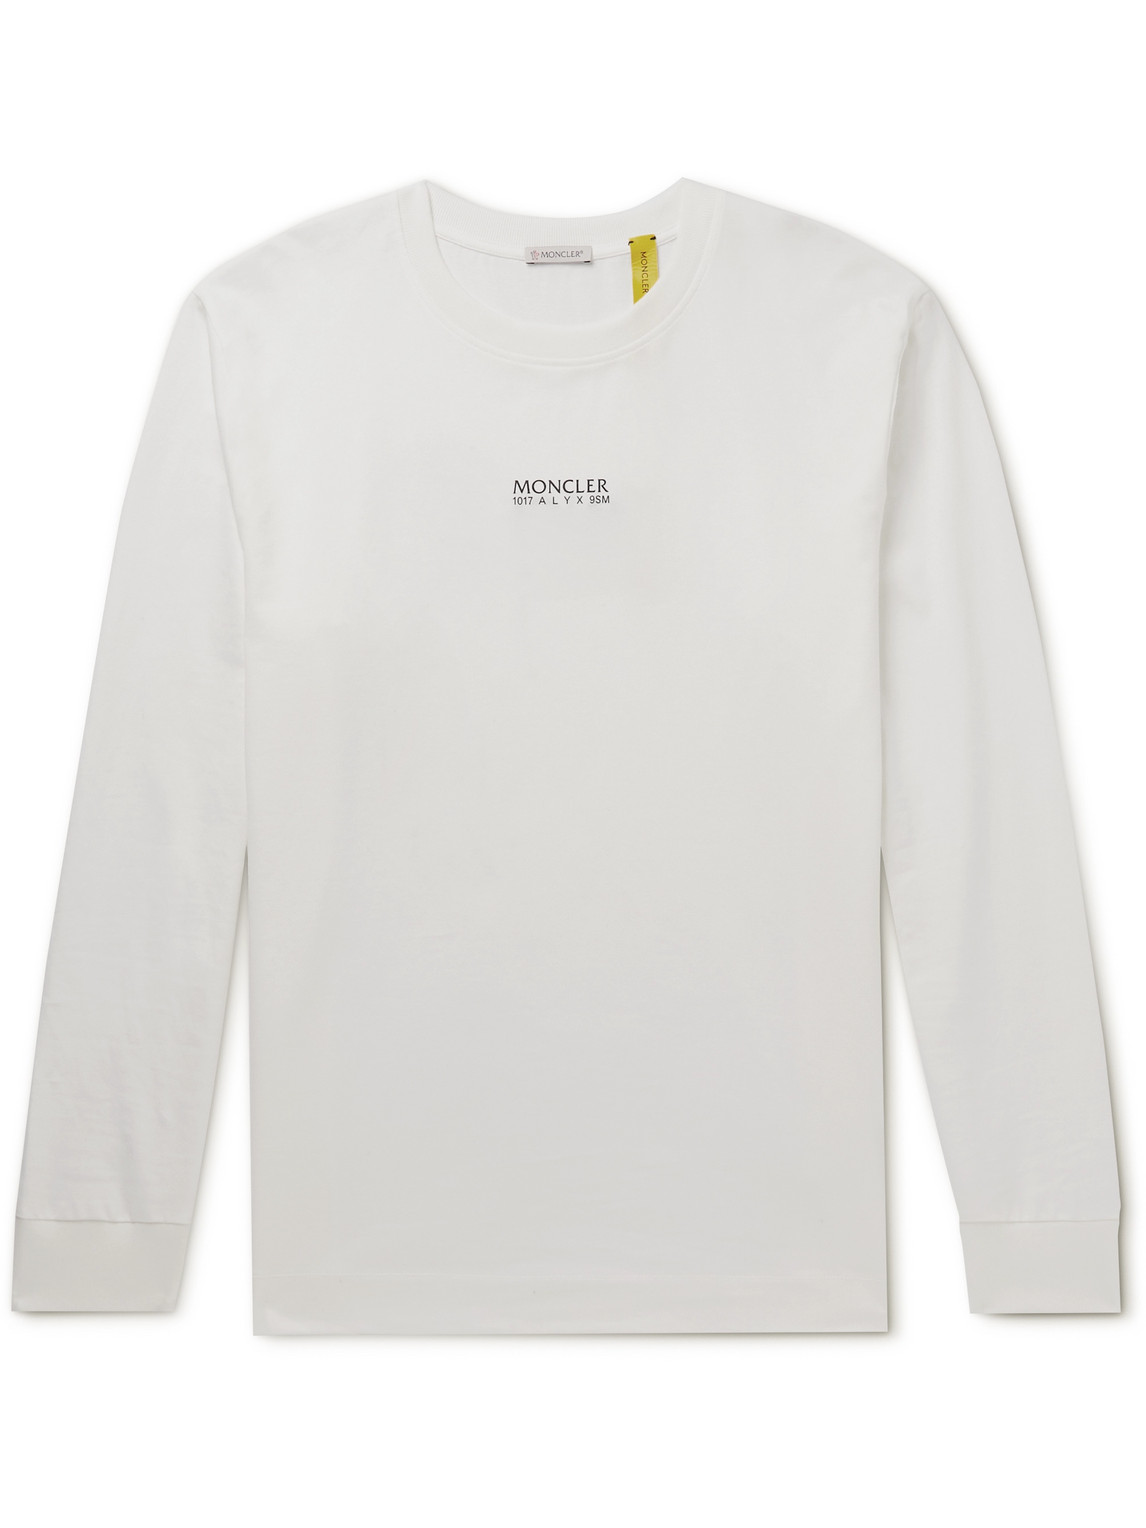 Moncler Genius 6 Moncler 1017 ALYX 9SM Embellished Cotton-Jersey T-Shirt